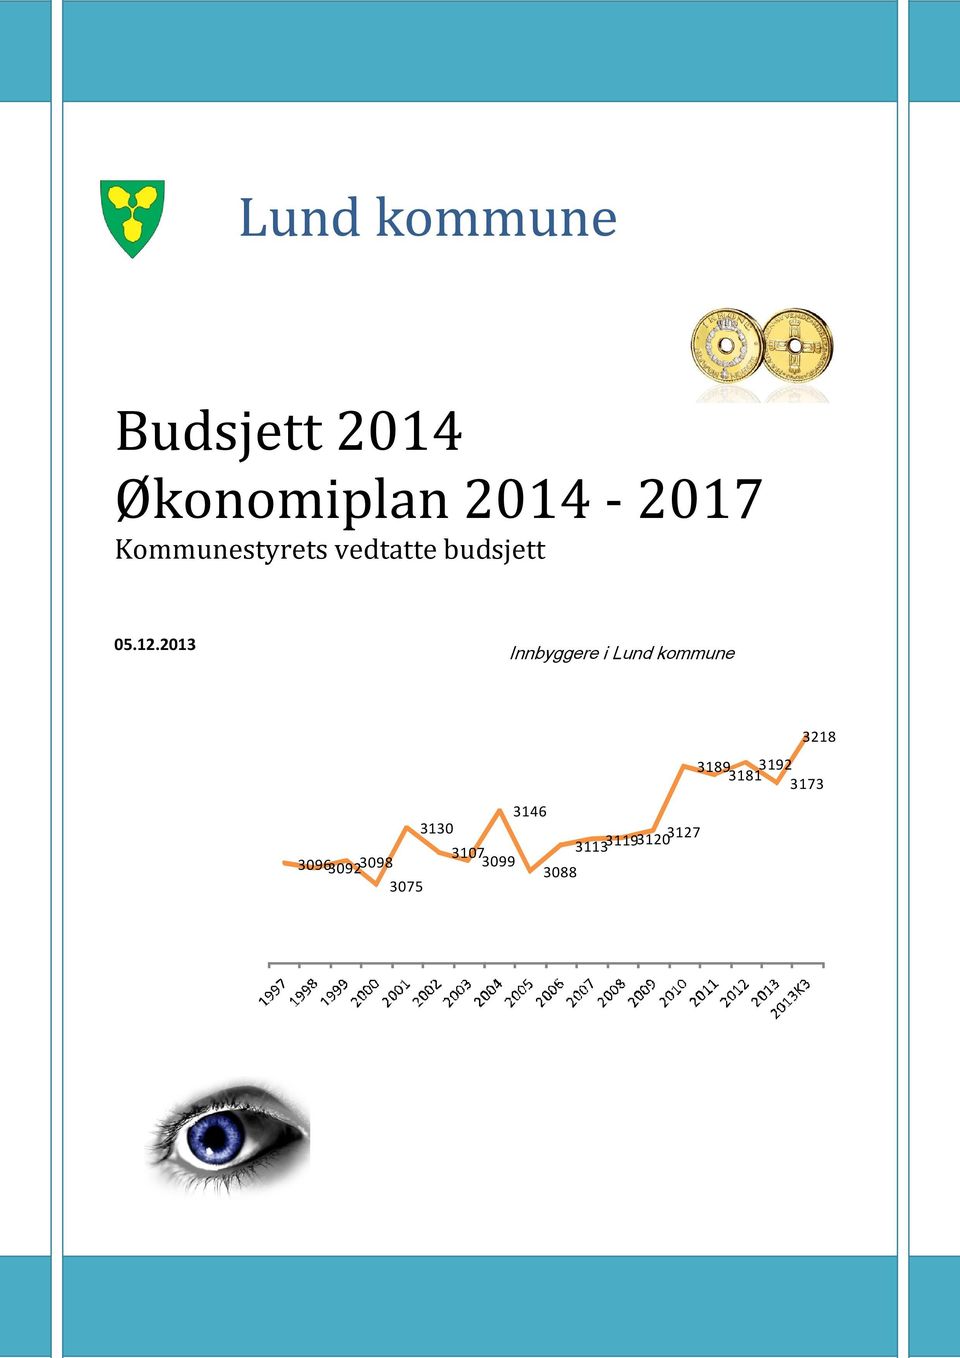 2013 Innbyggere i Lund kommune 30963092 3098 3075